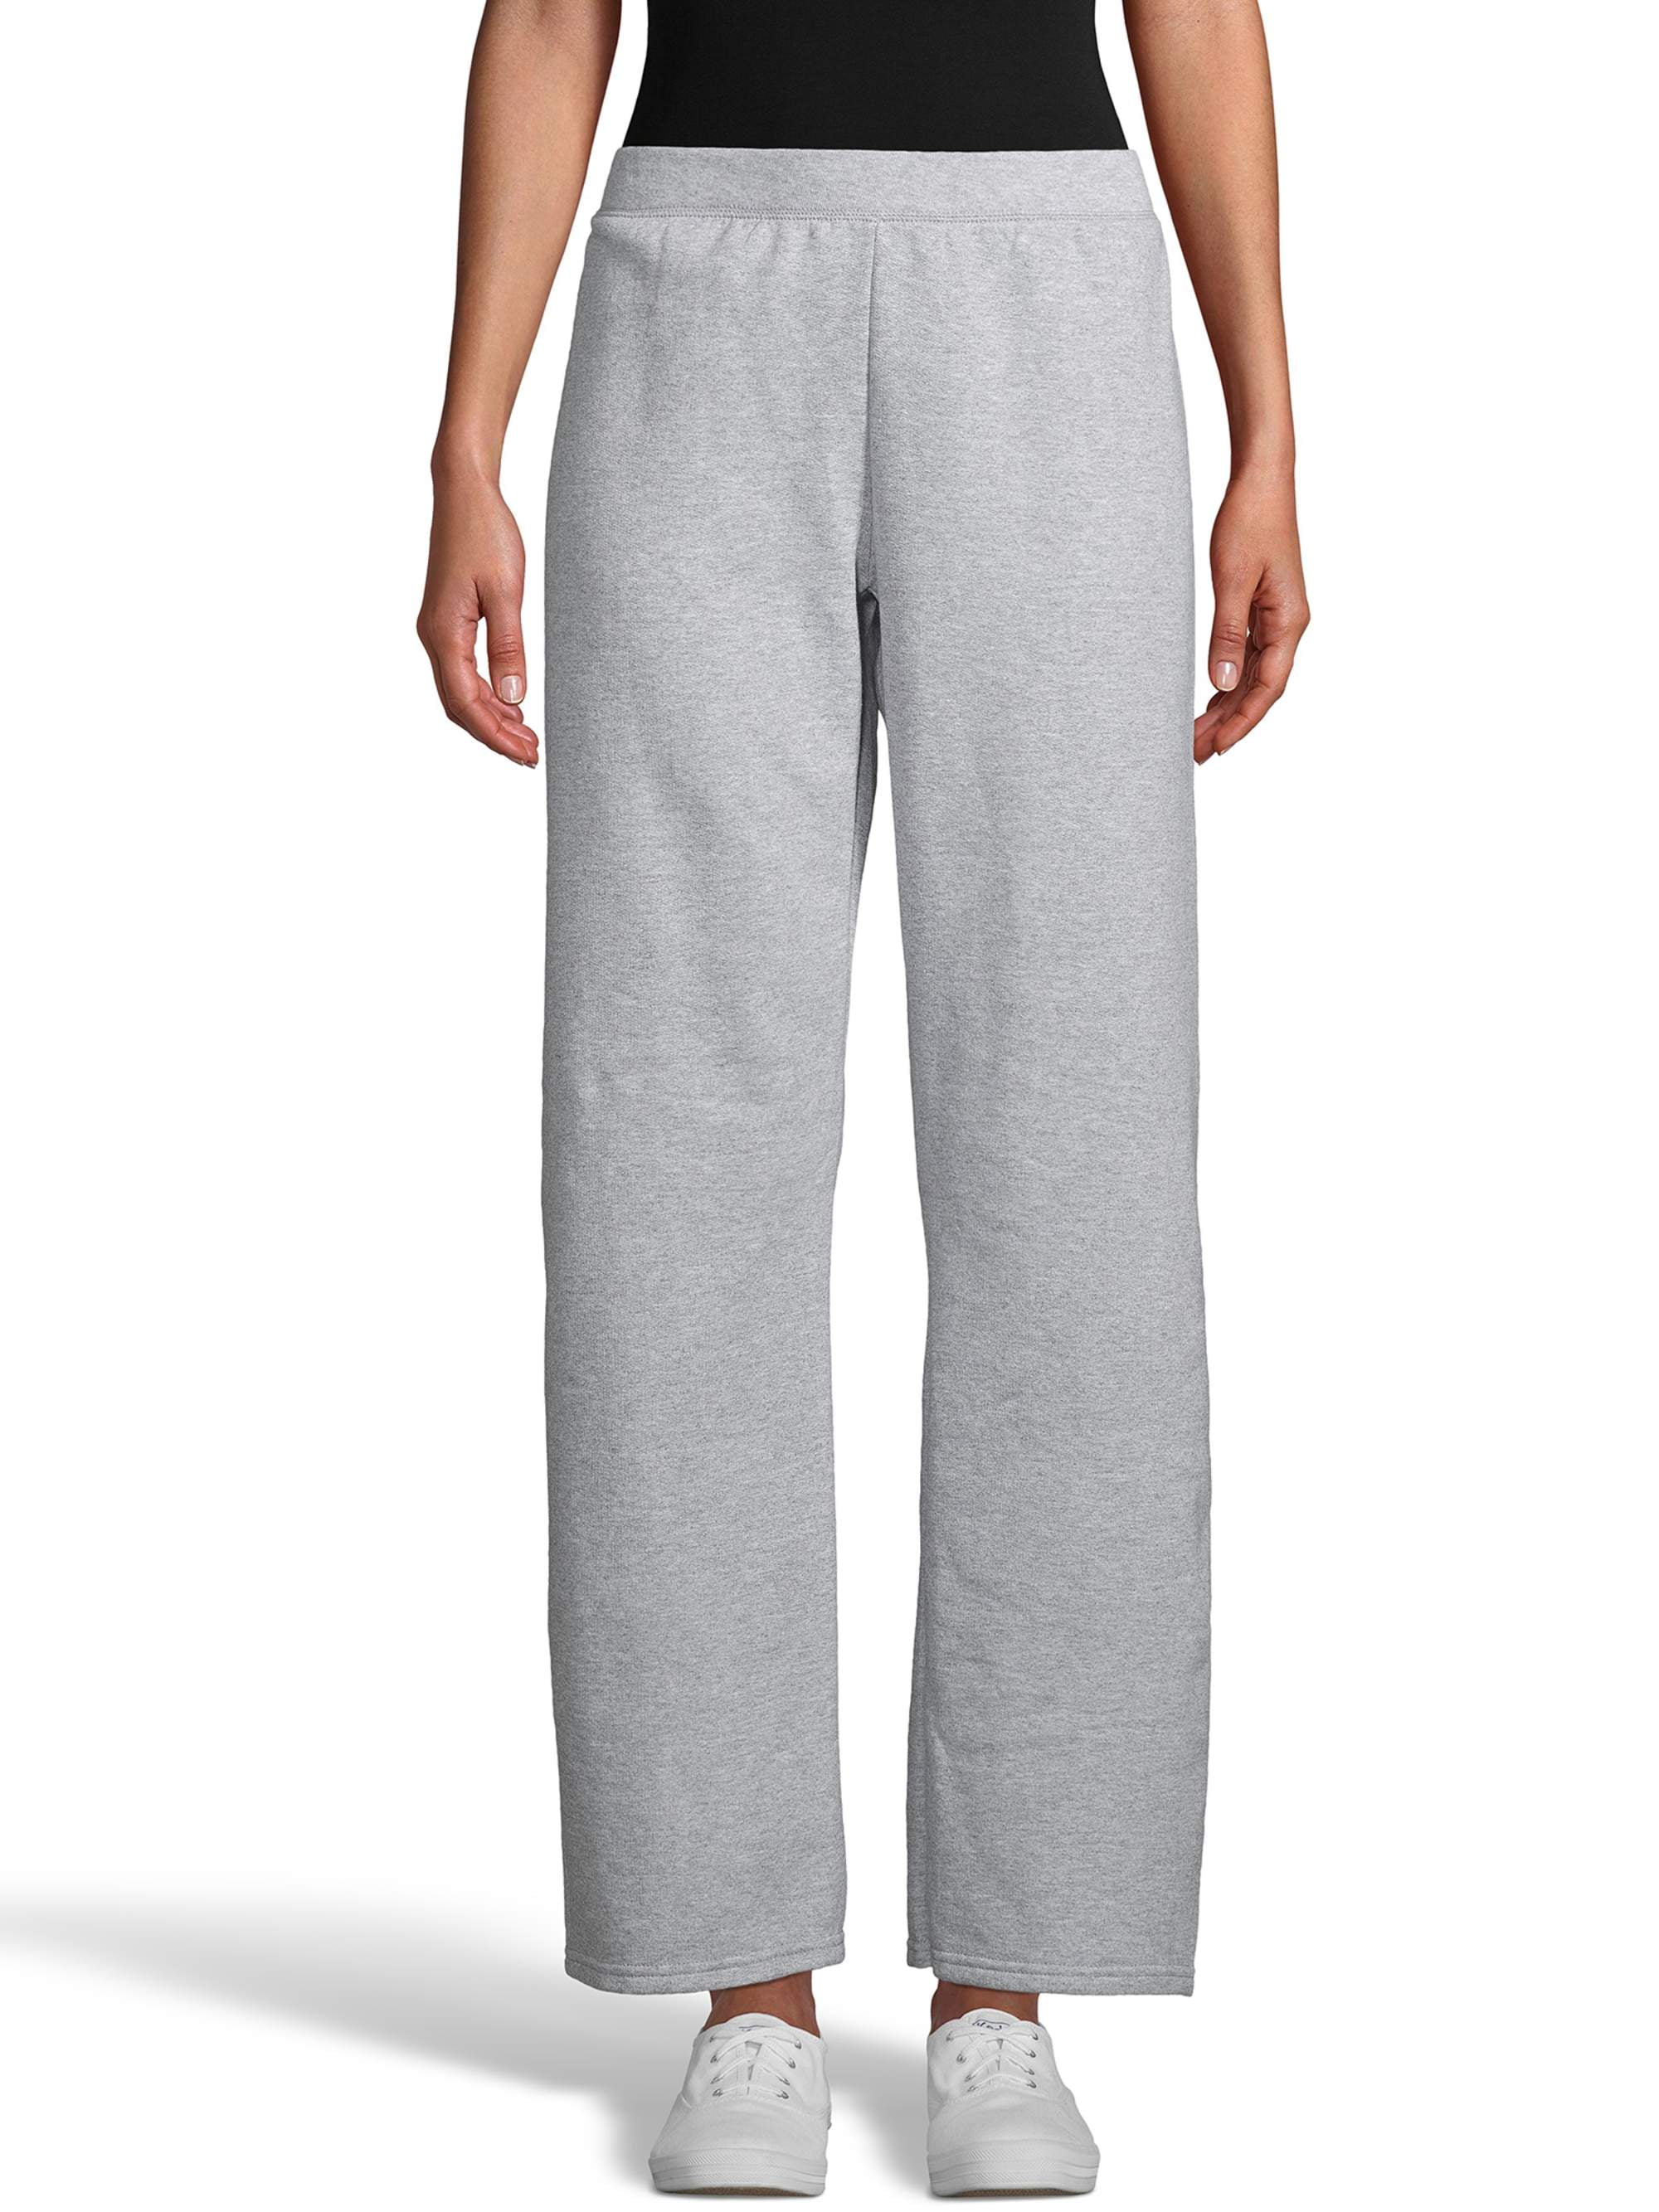 Hanes ComfortSoft EcoSmart Women's Open Bottom Fleece Sweatpants, Sizes  S-XXL and Petite 